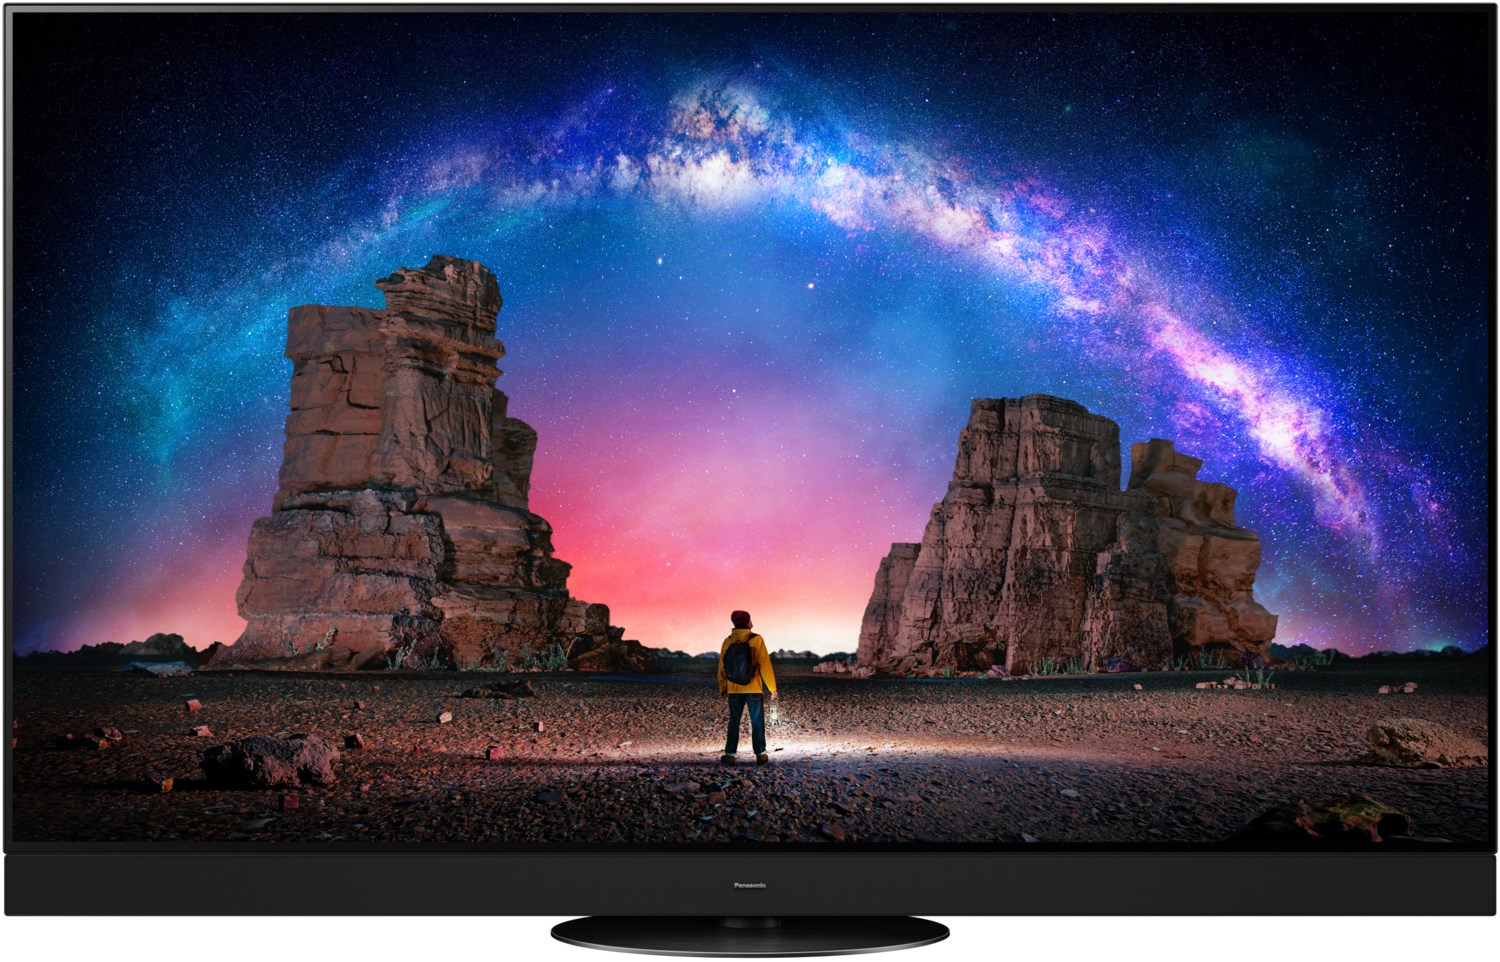 Panasonic OLED TV 65 Zoll (165cm) 4k UHD schwarz